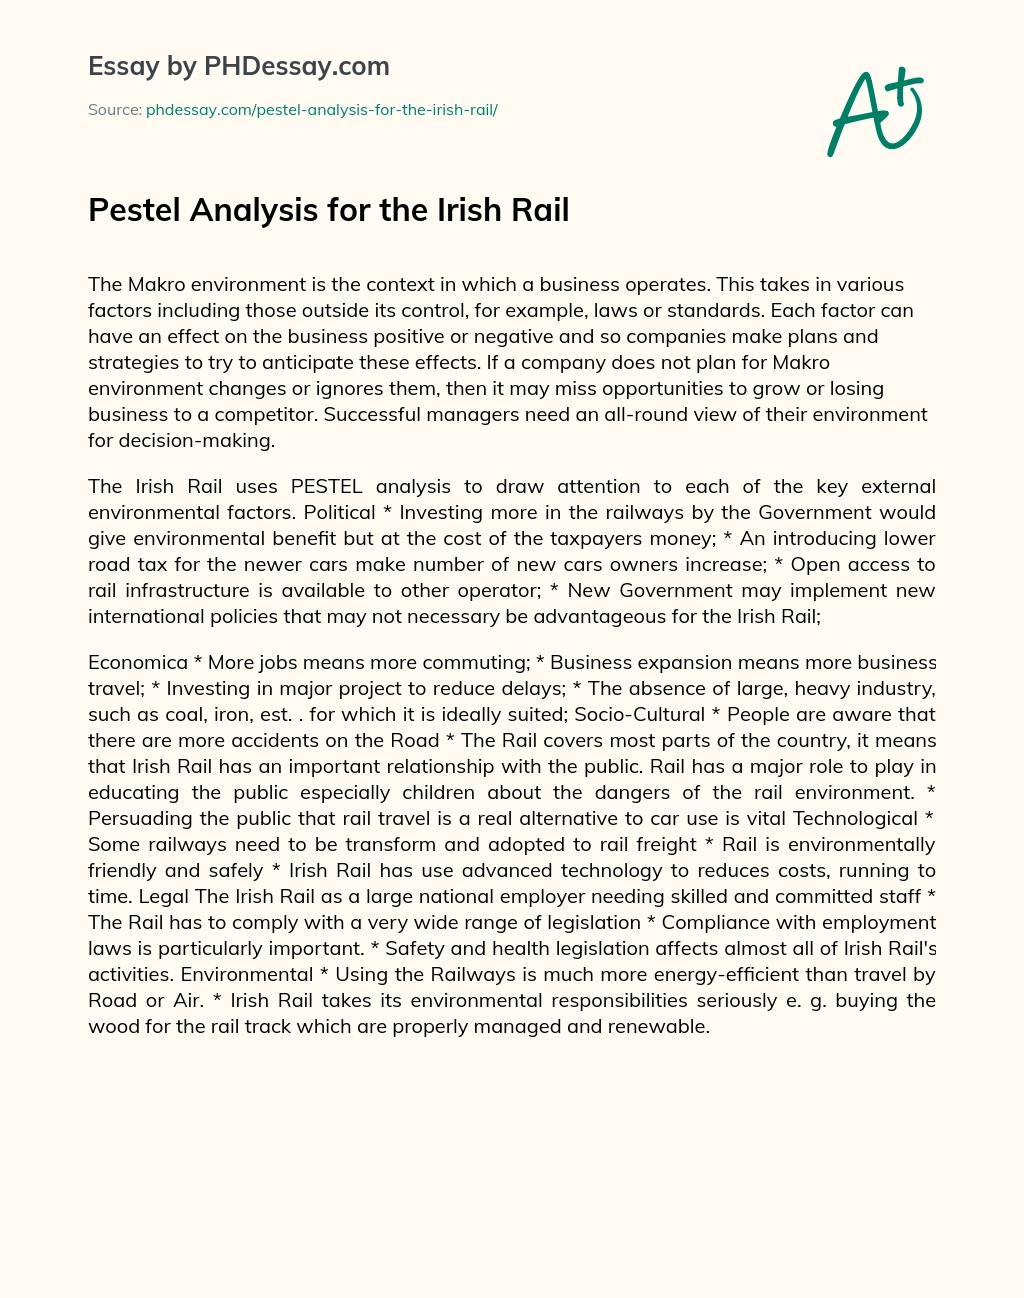 Pestel Analysis for the Irish Rail essay